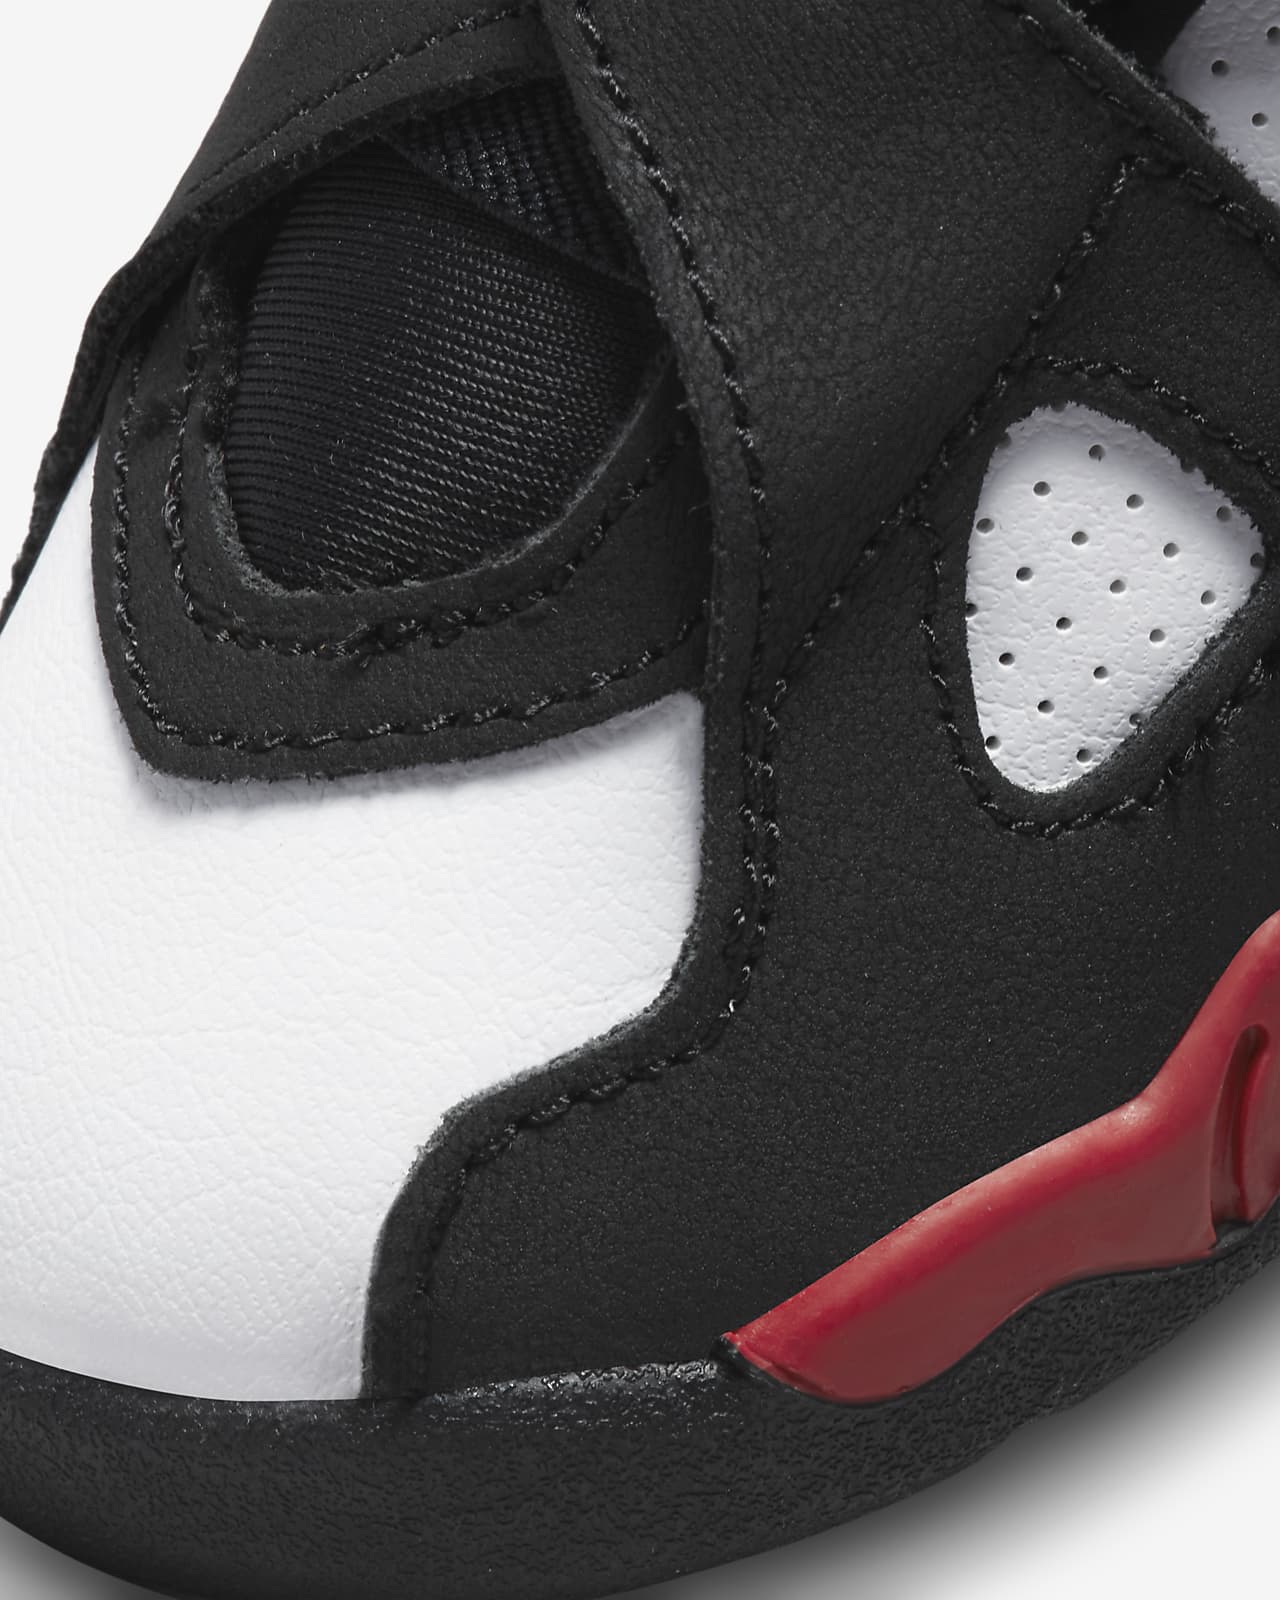 Jordan 8 Retro Baby/Toddler Nike.com